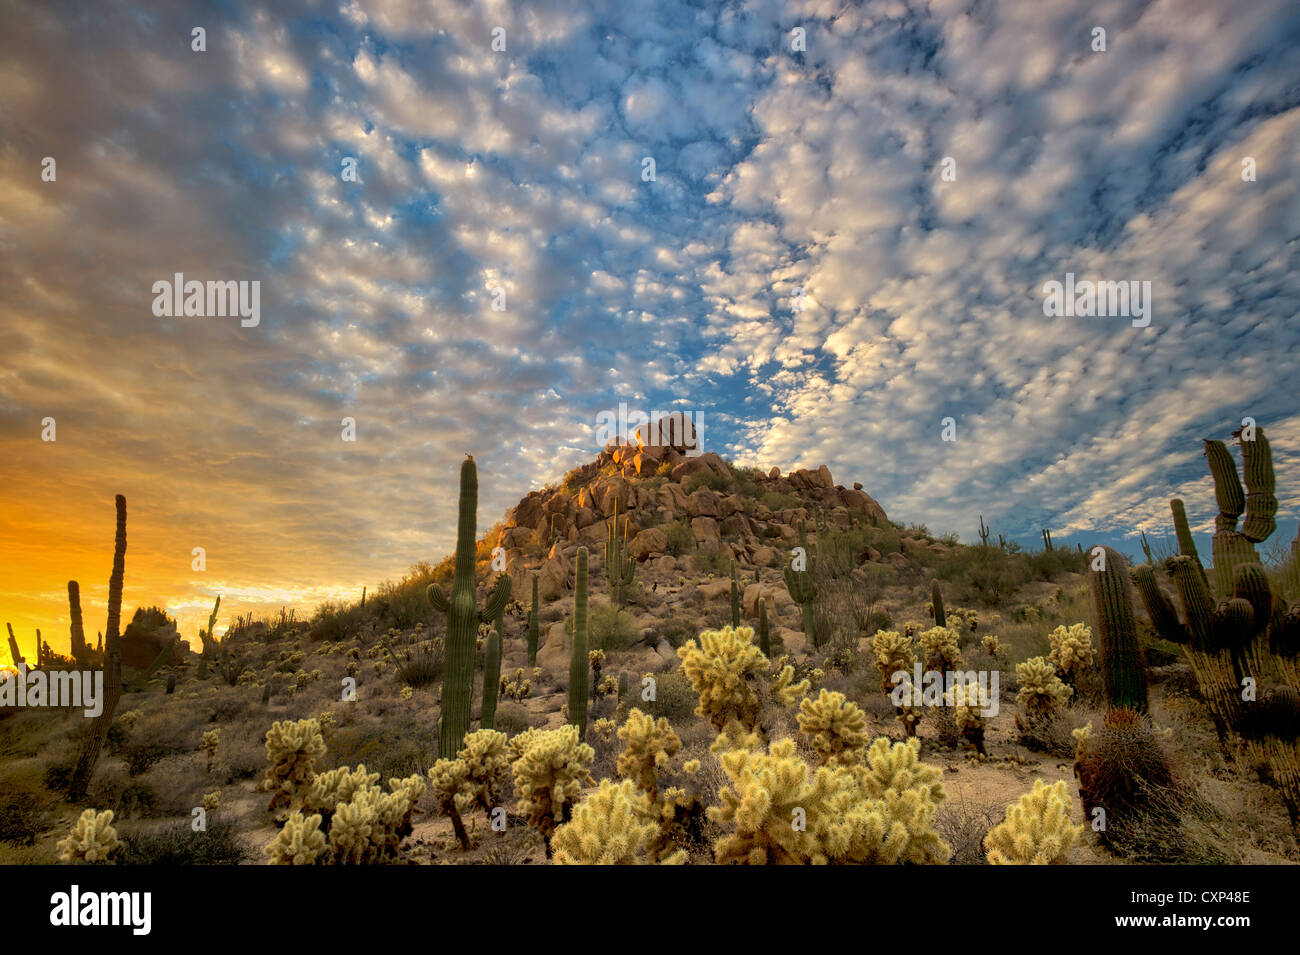 Saguaro and cholla cactus at sunset. Sonoran Desert, Arizona Stock Photo